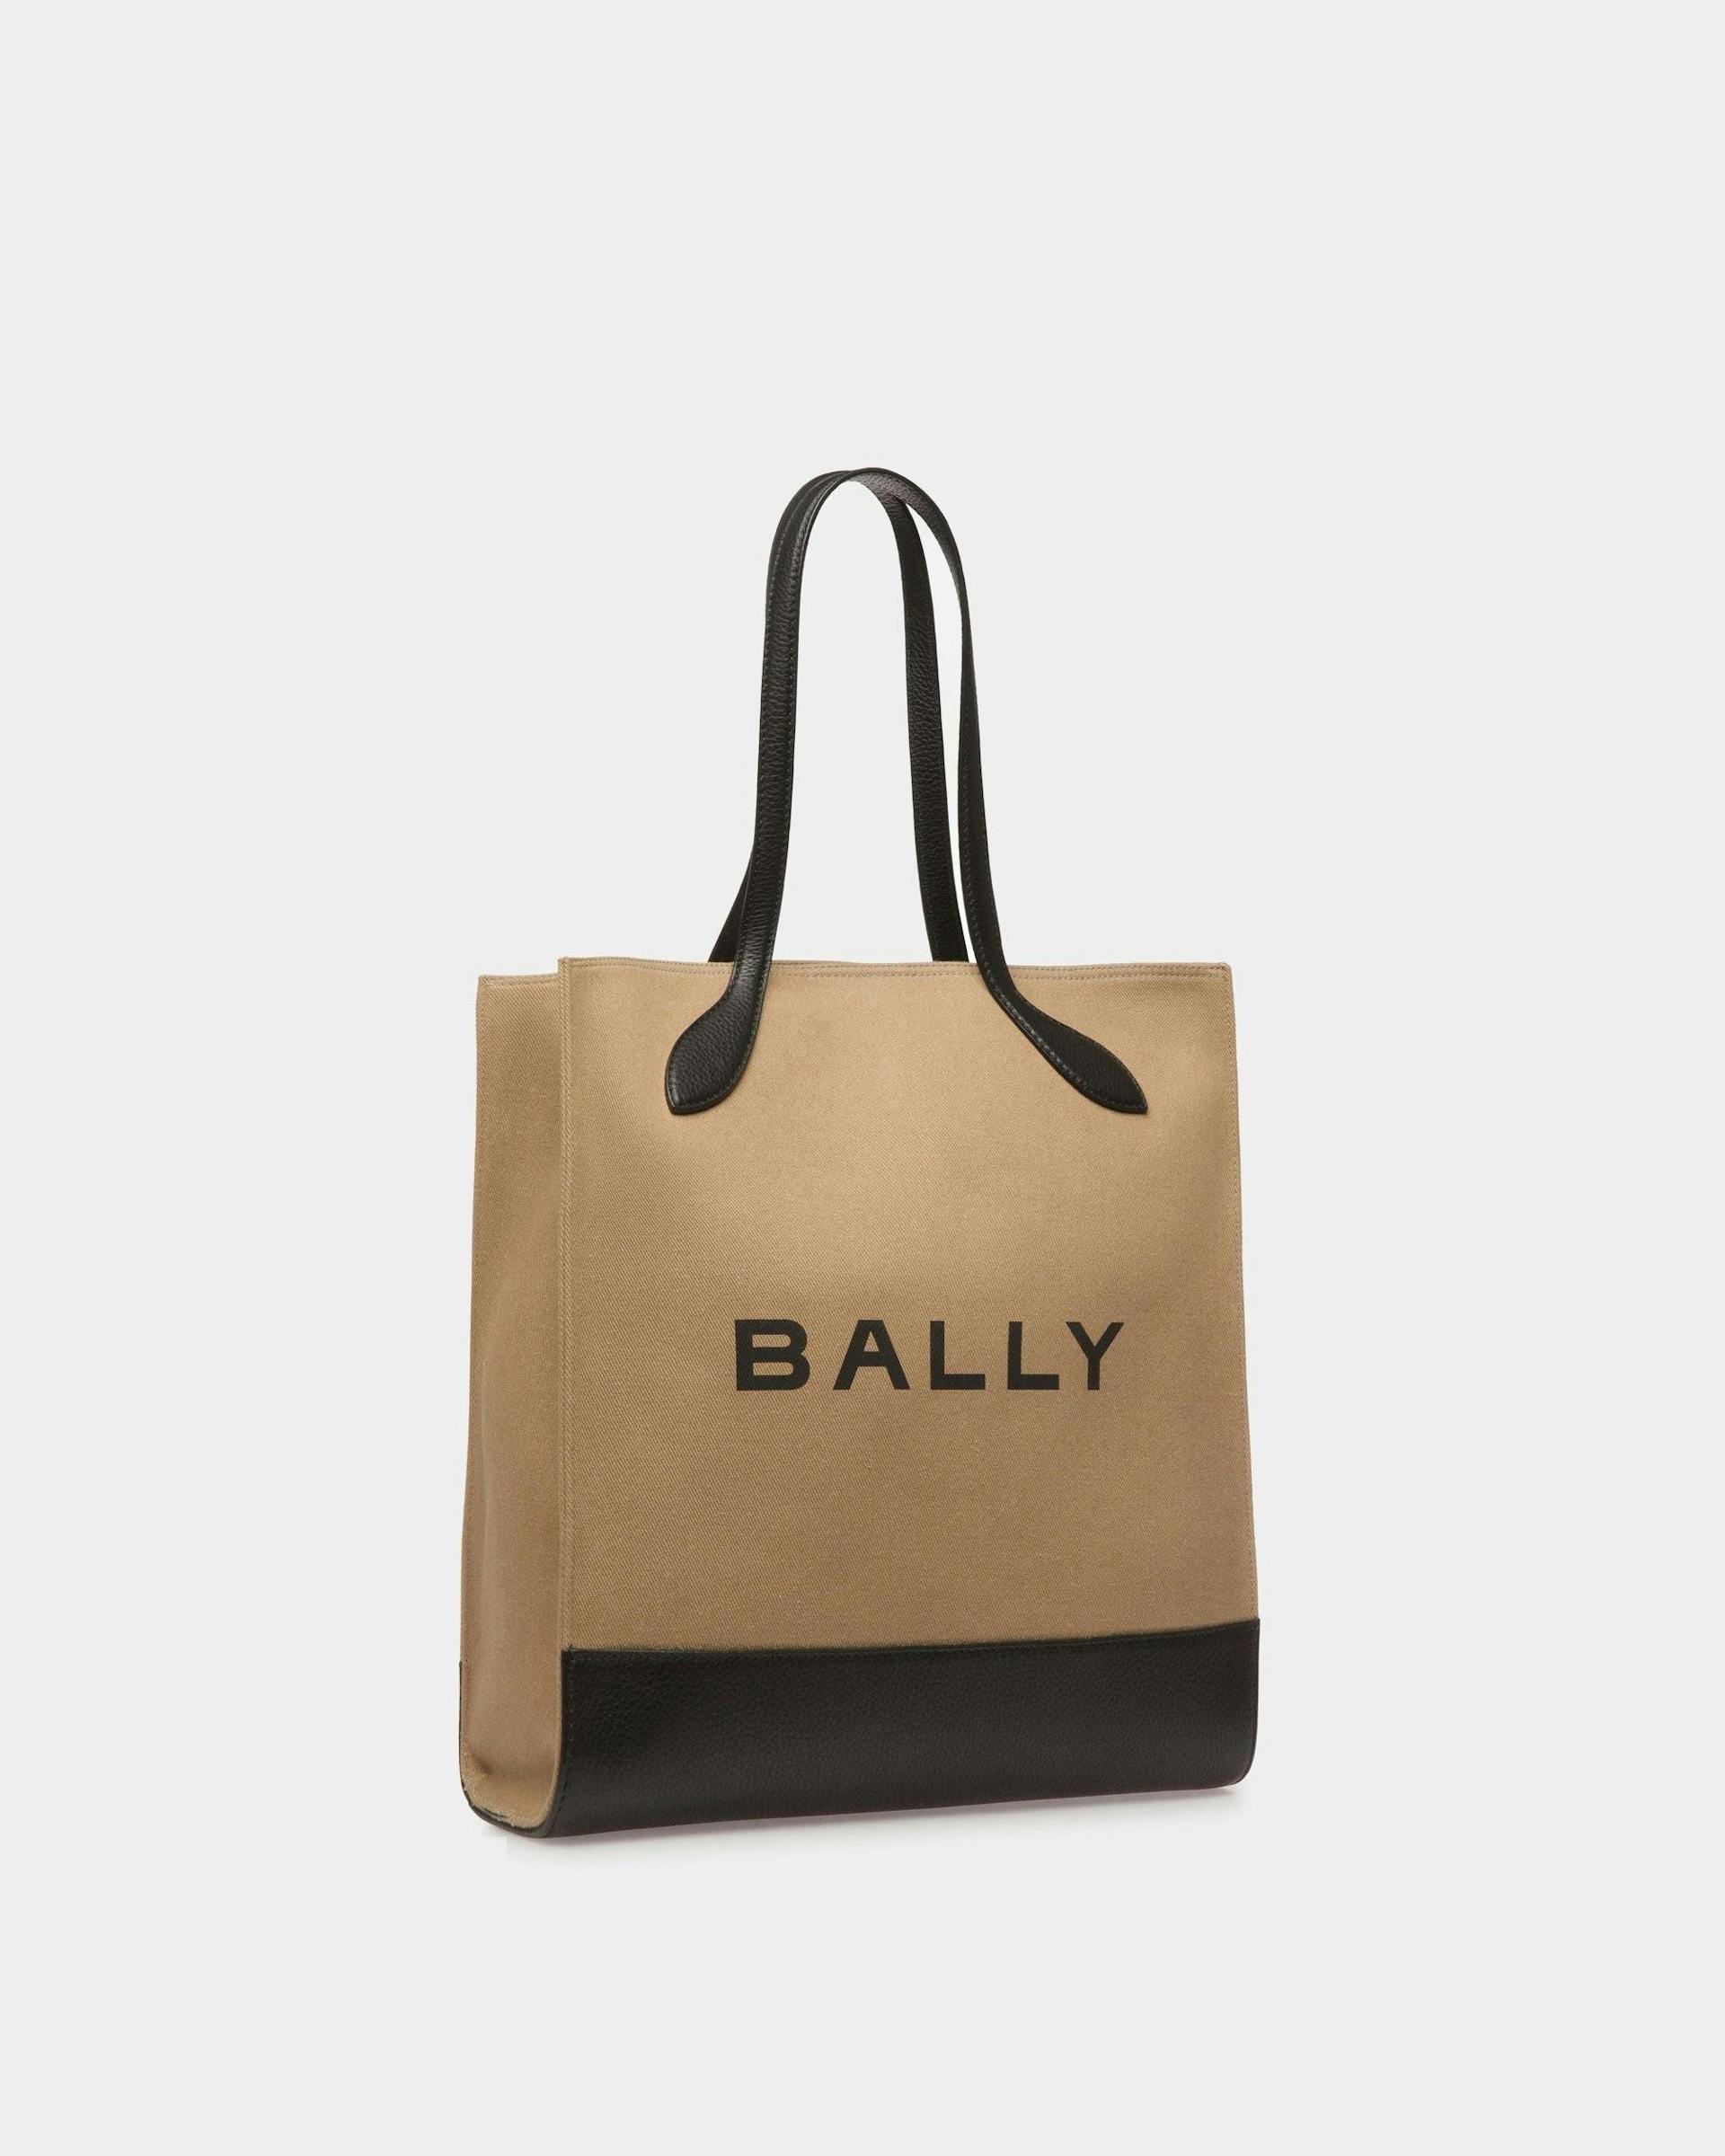 Bar Keep On | Women's Tote Bag | Sand And Black Fabric | Bally